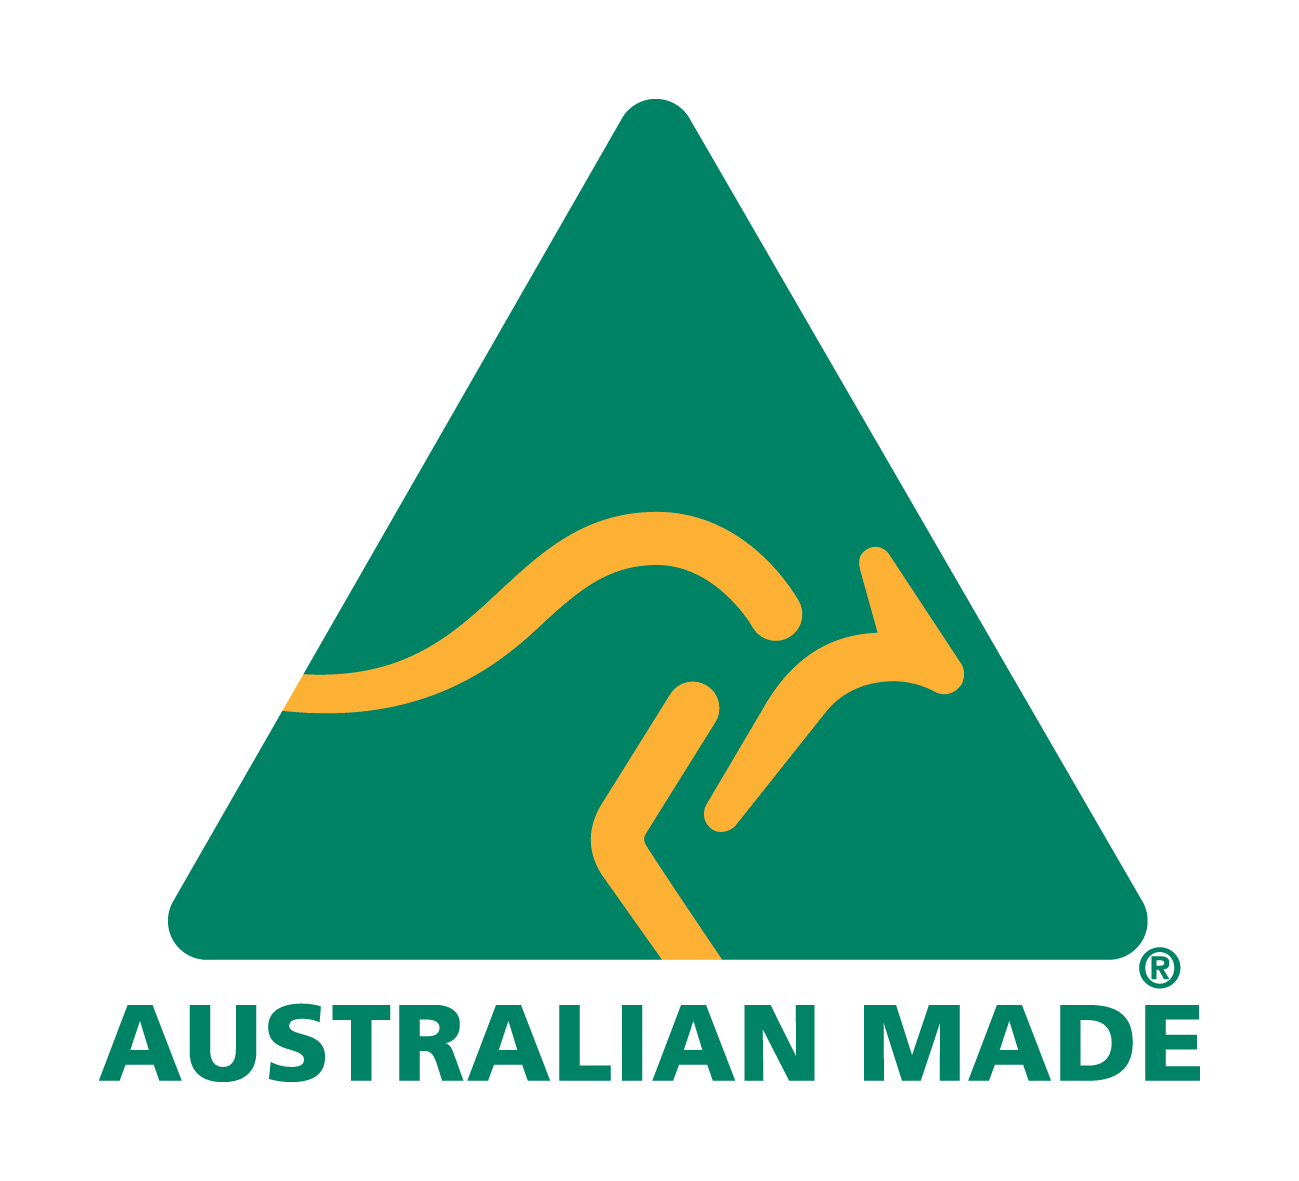 Ebay partners with Australian Made